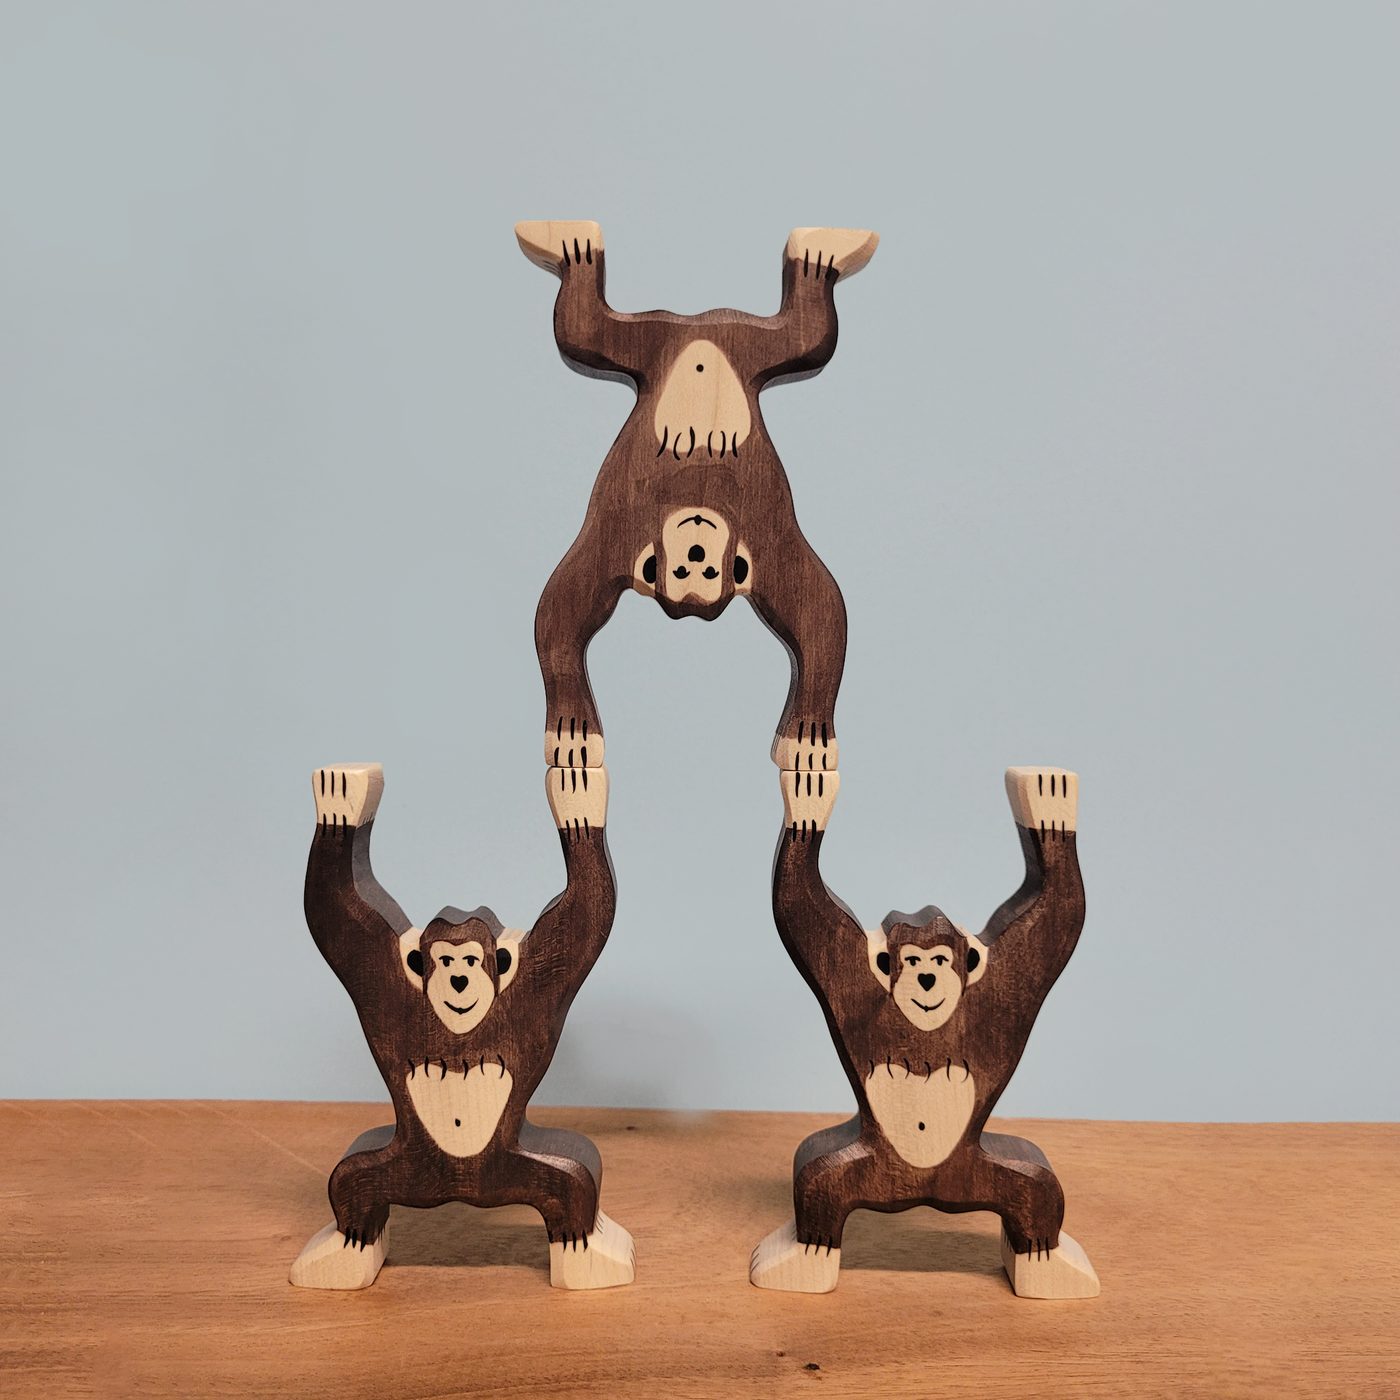 Holztiger Chimpanzee, standing